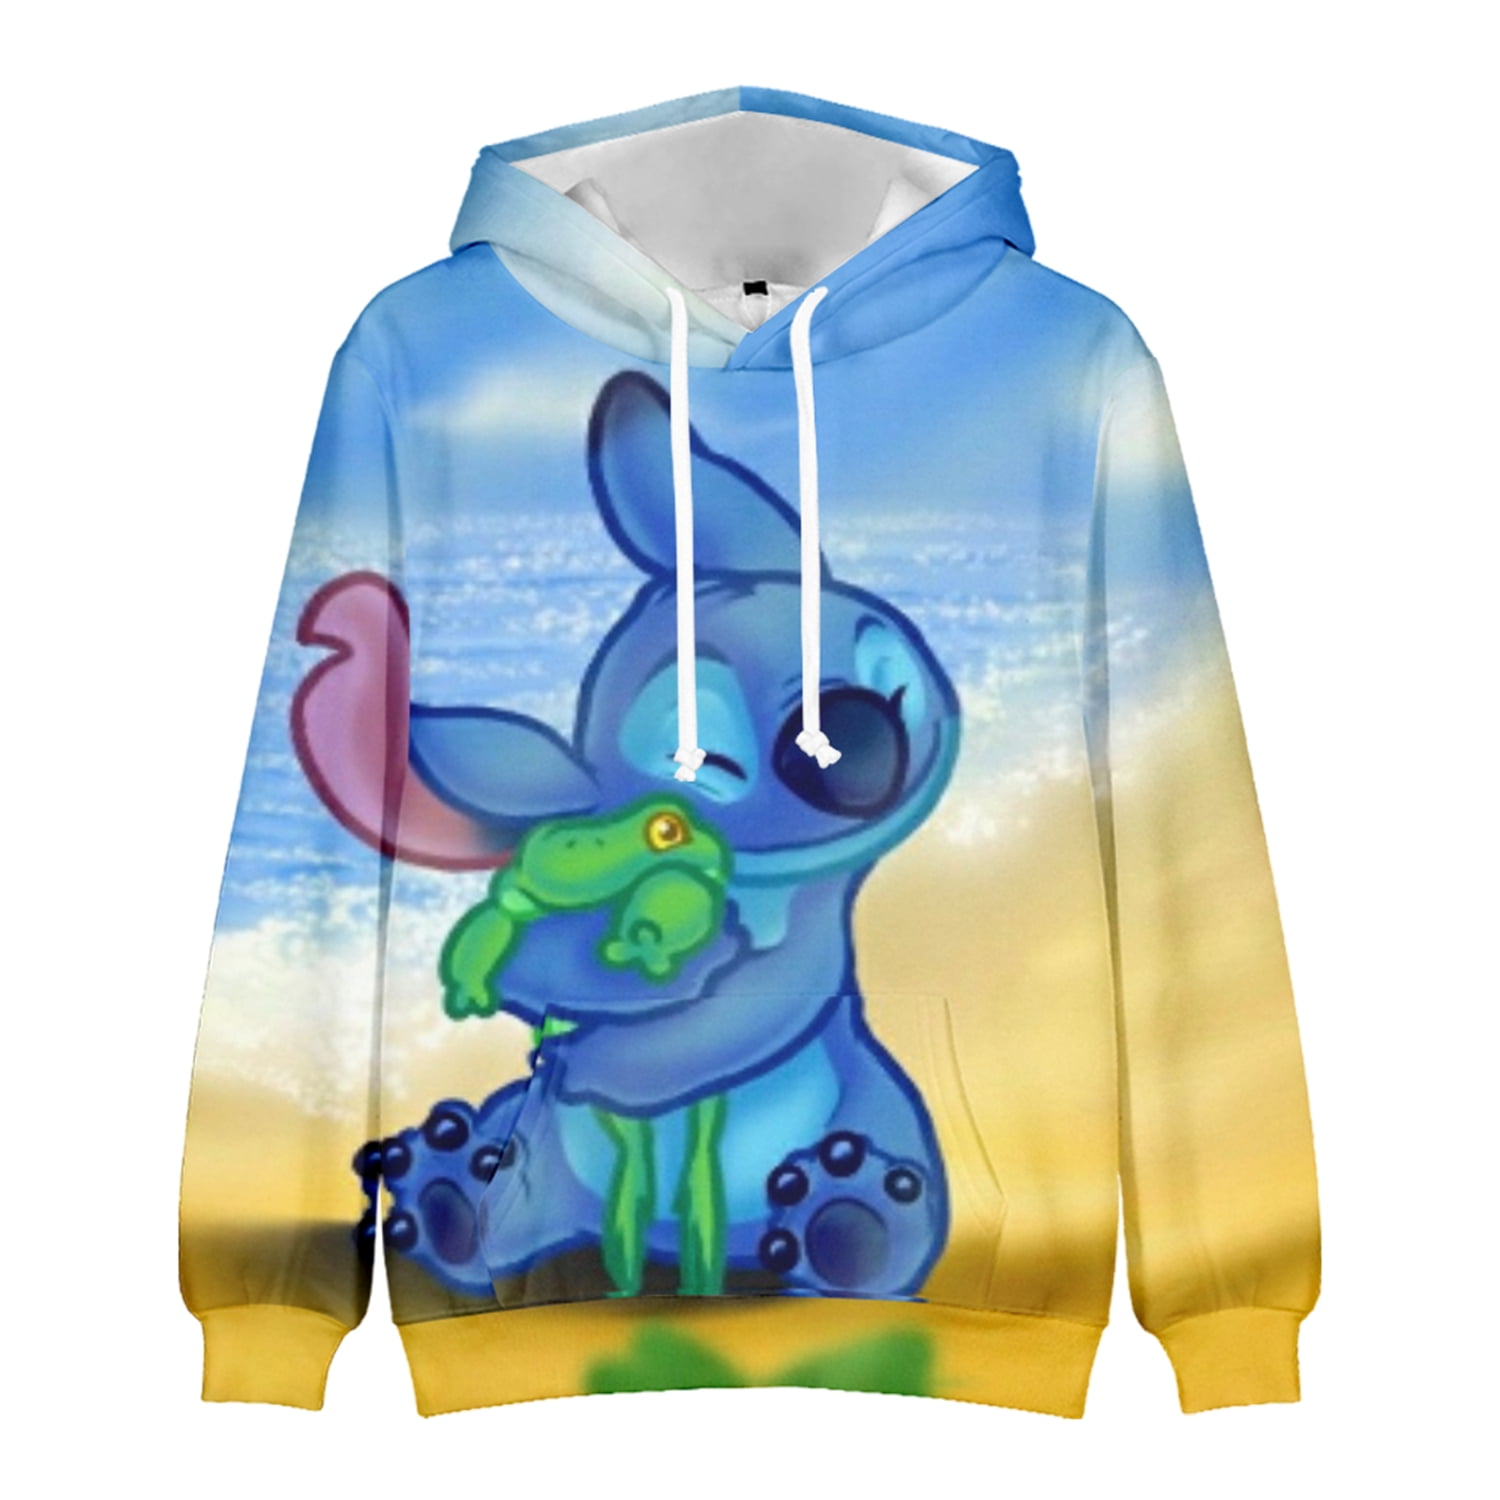 Unisex Stitch Graphic Hoodies 3D Print Cool Sweatshirt Cool Design with  Pocket for Men and Women Parent -child(#2,Adult L) - Walmart.com